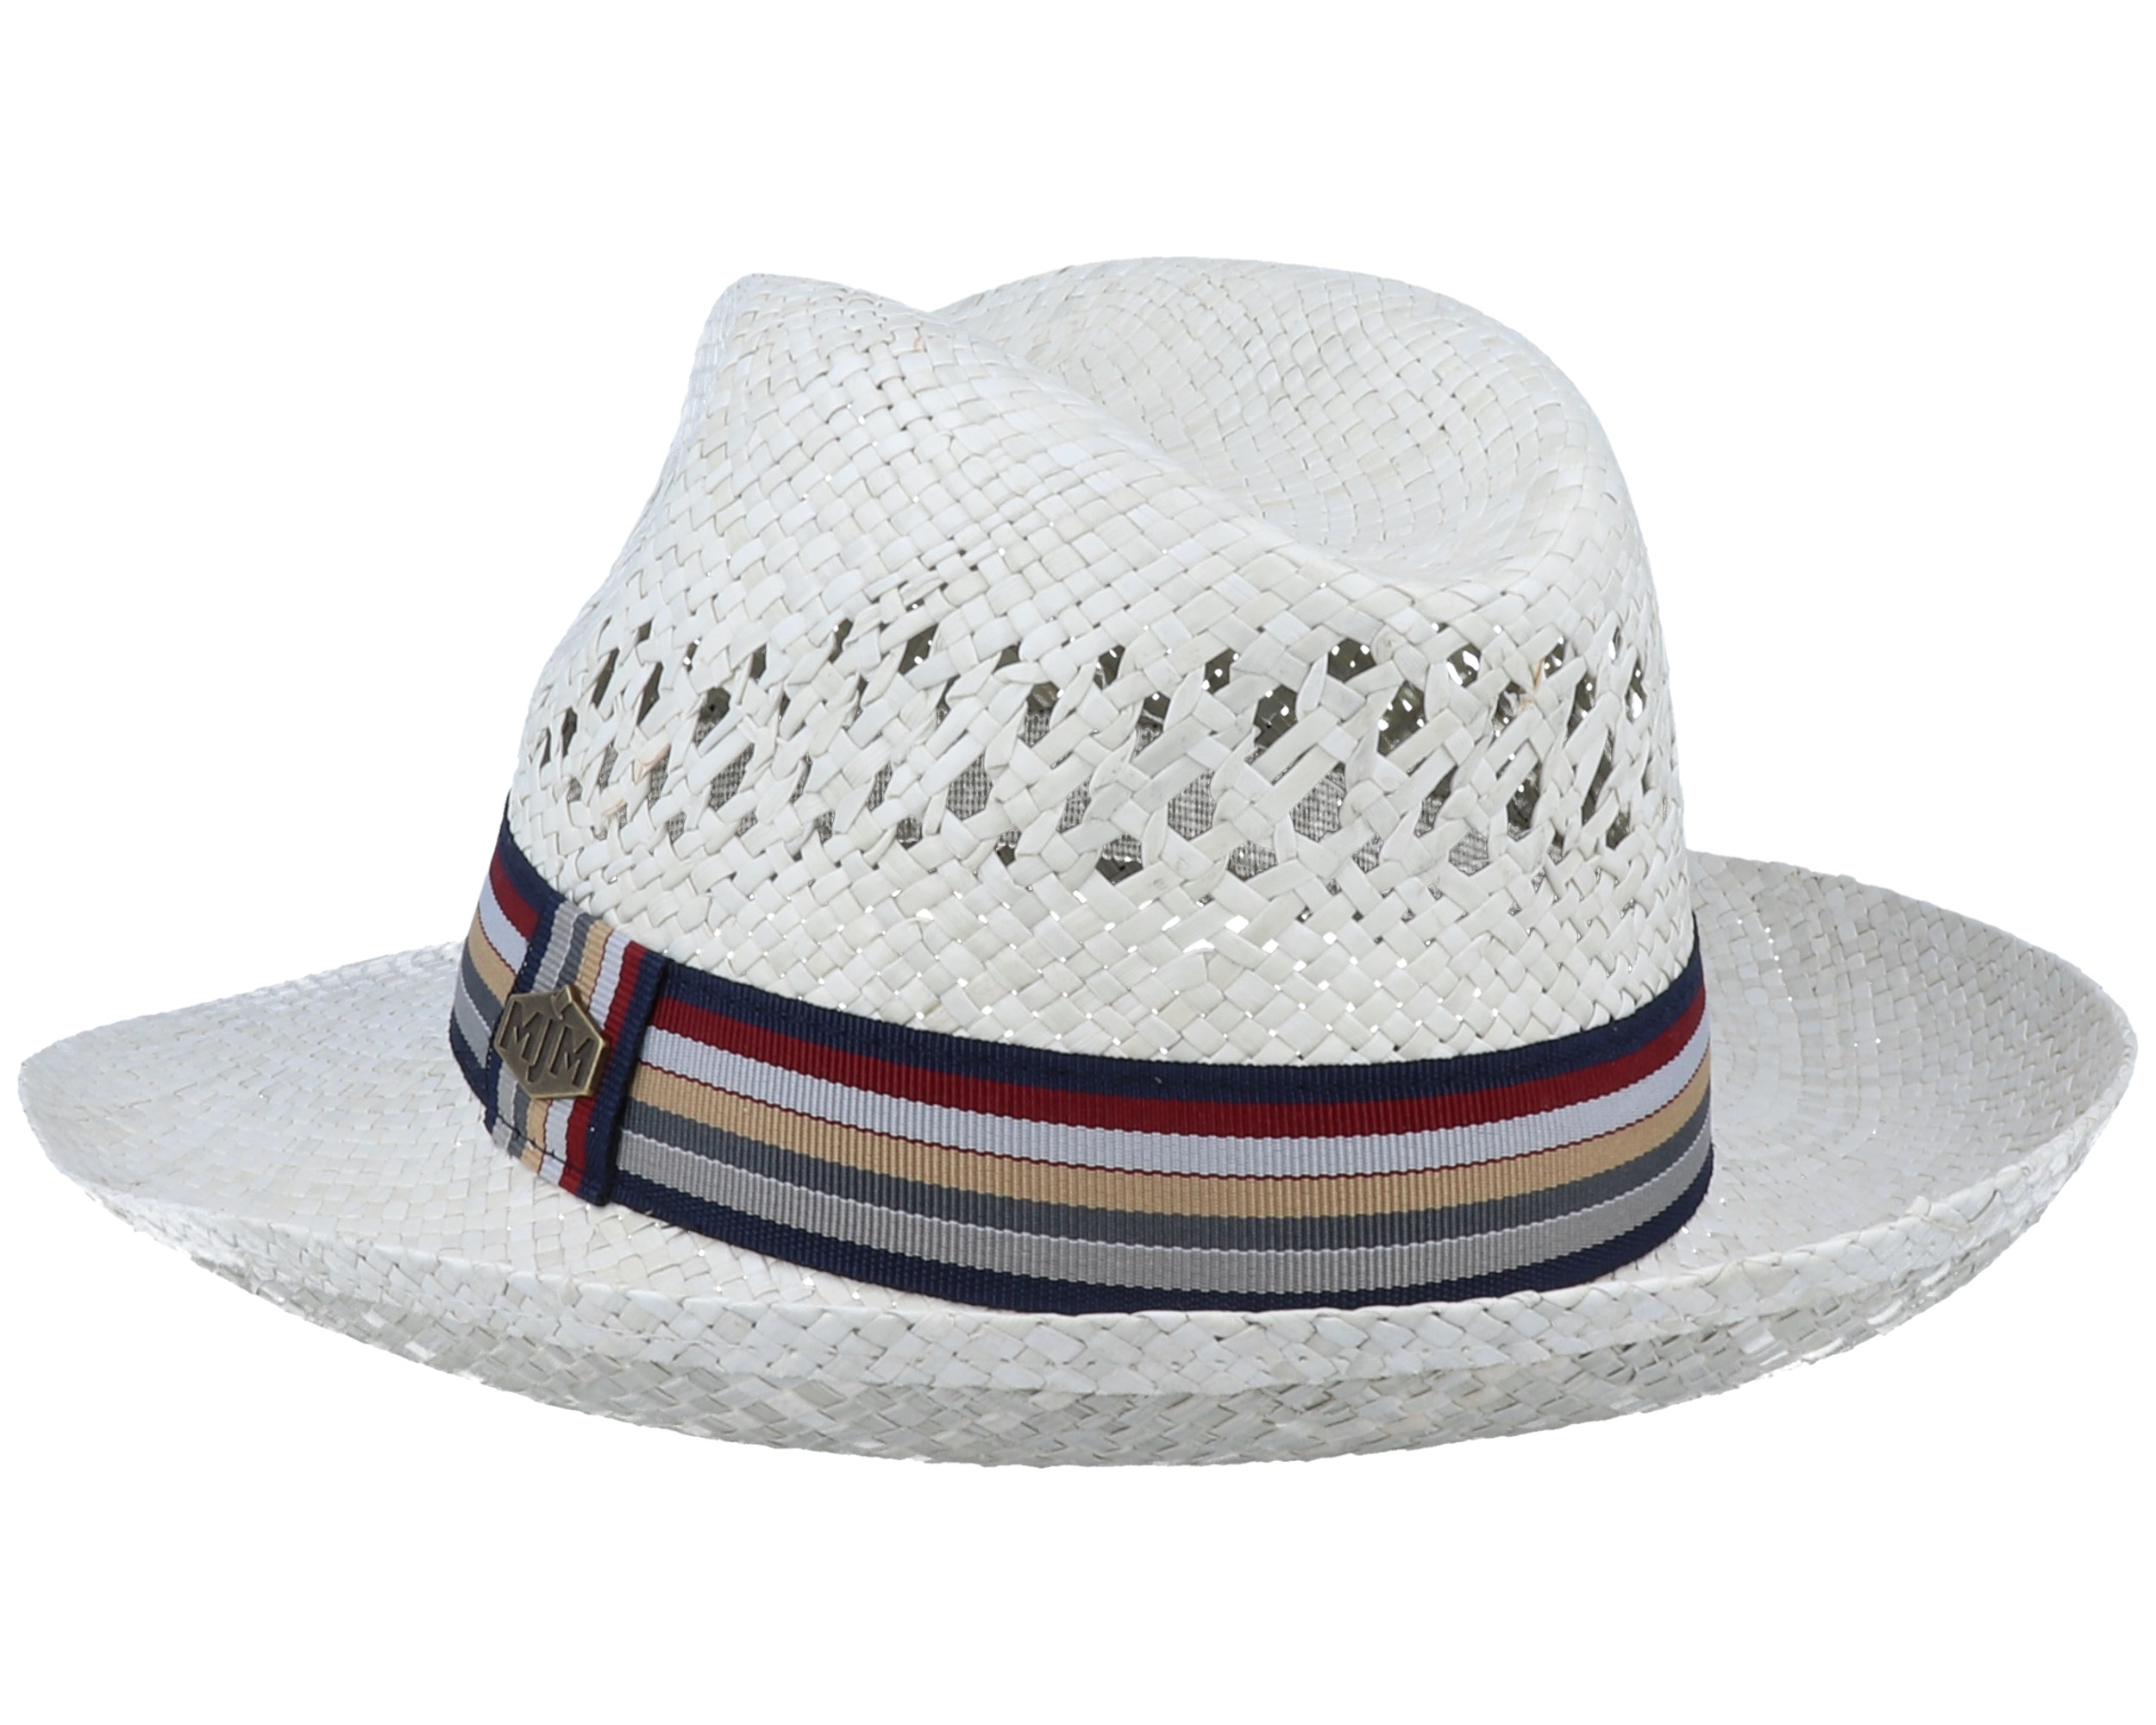 Robyn Straw Natural White Straw Hat - MJM Hats hats - Hatstoreworld.com